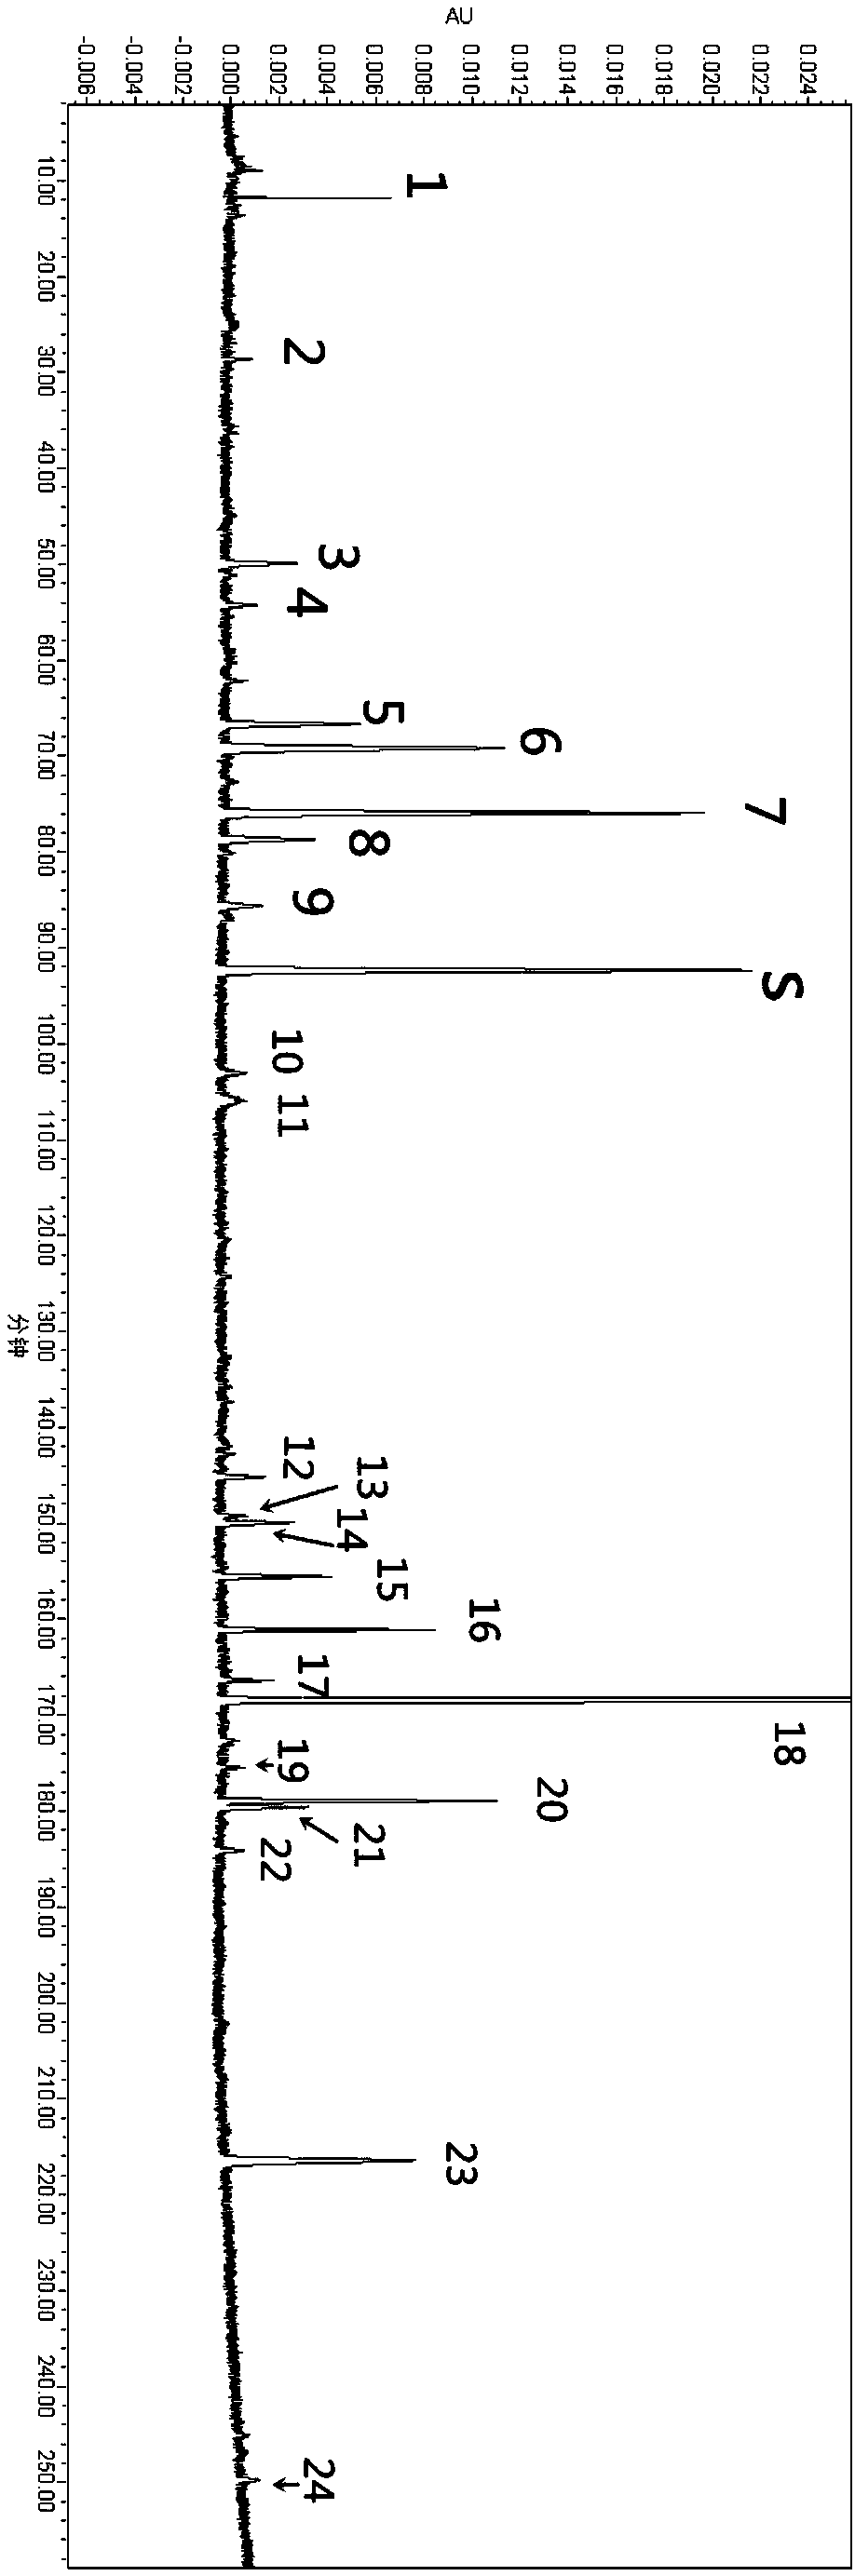 External and internal standard fingerprint spectrum measuring method of honeysuckle flower and radix scutellariae particle